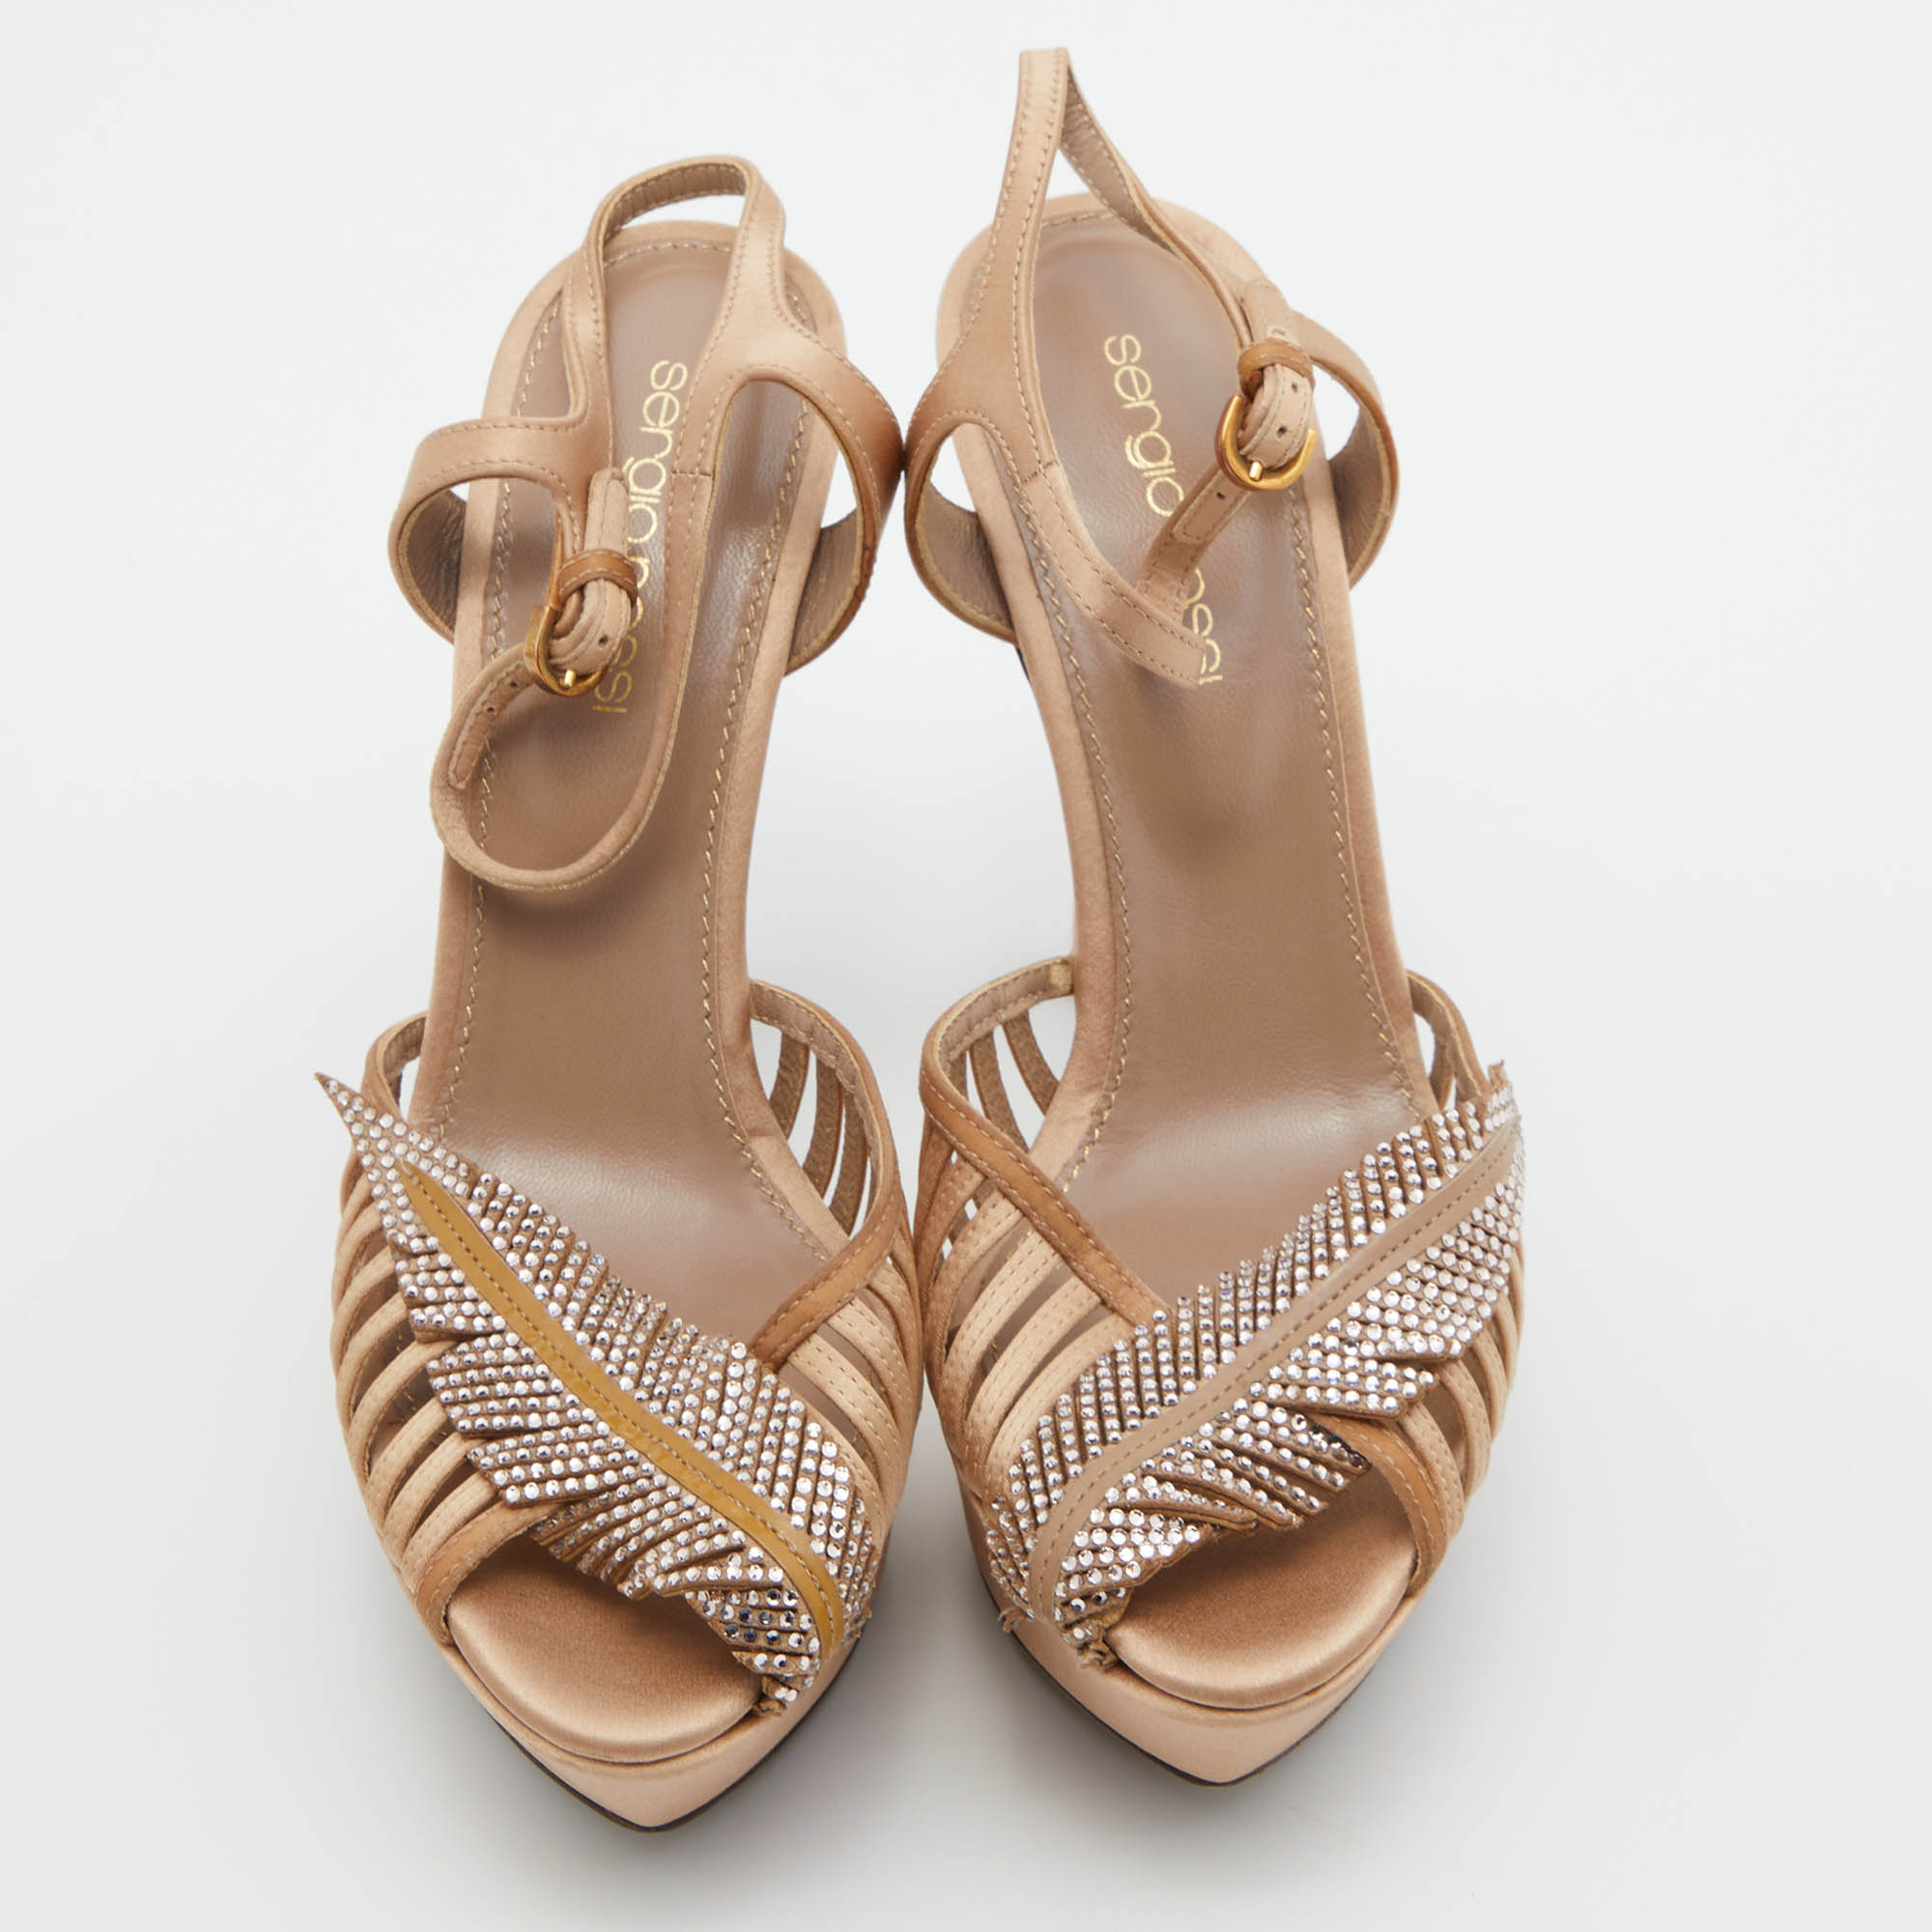 Sergio Rossi Light Brown Satin Crystal Embellished Ankle Strap Sandals Size 35.5